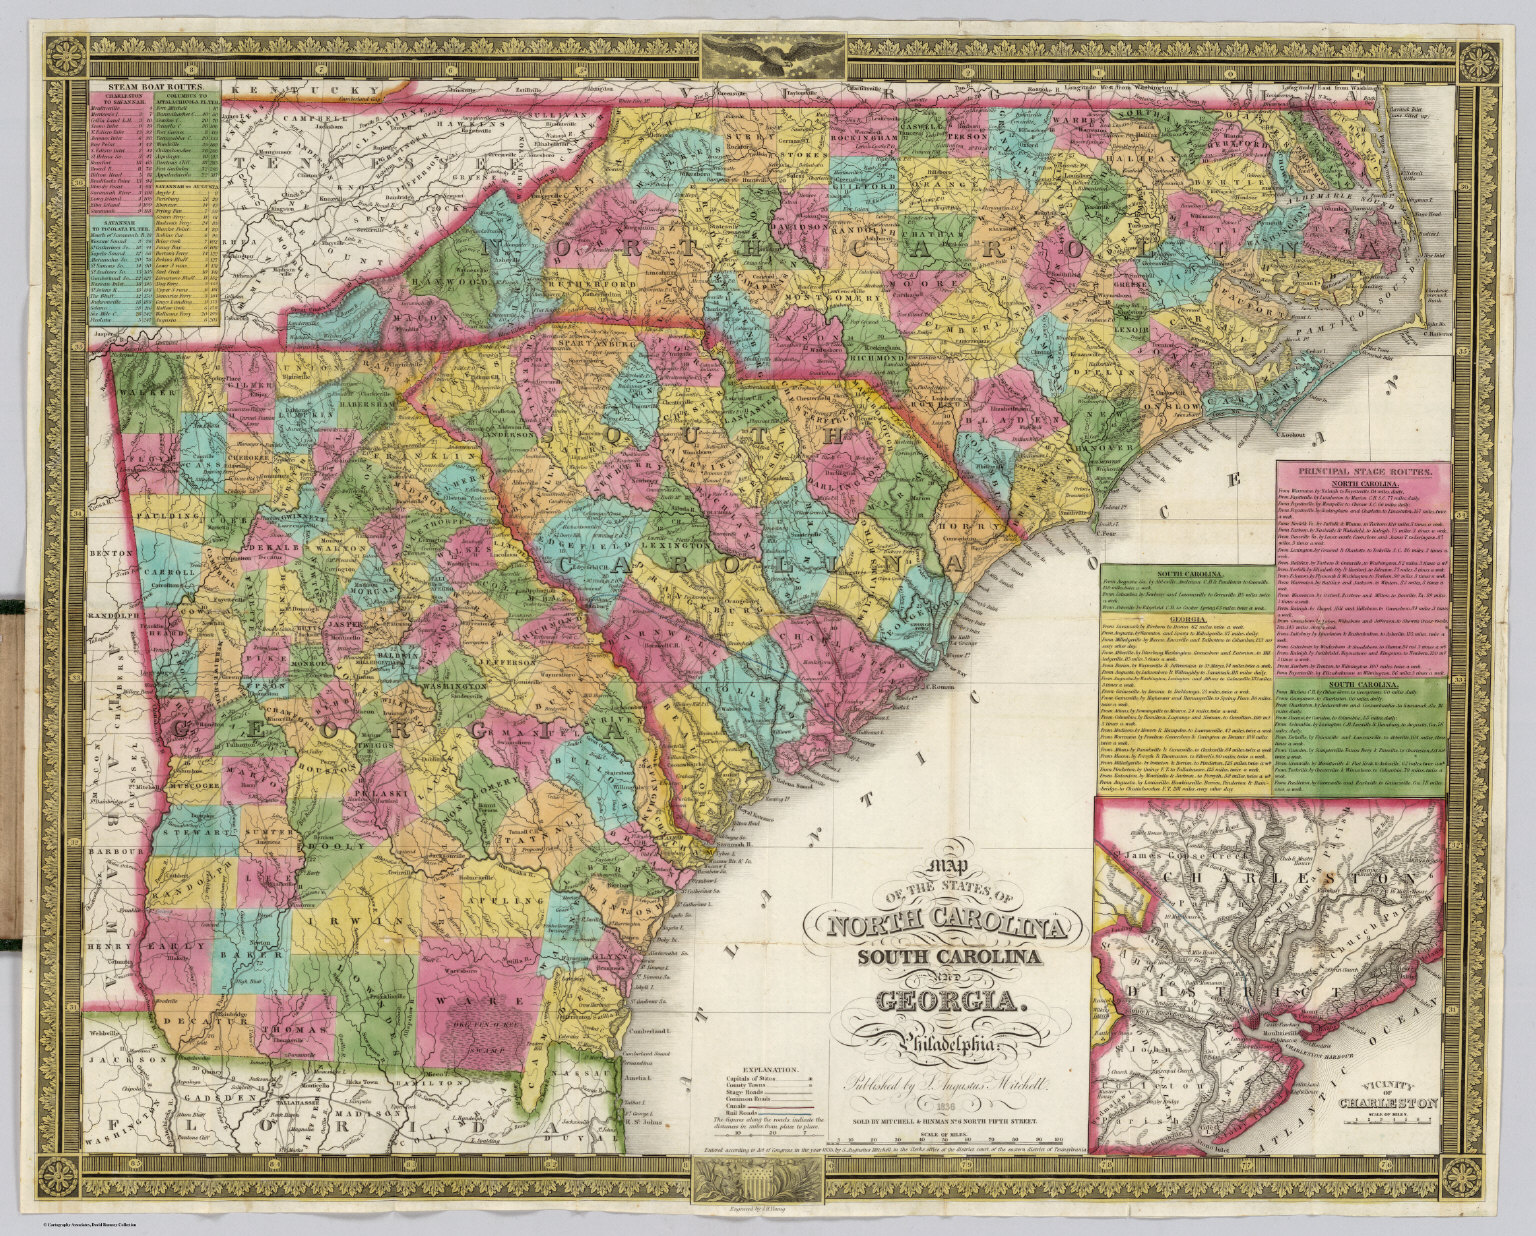 North Carolina South Carolina And Georgia David Rumsey Historical Map Collection